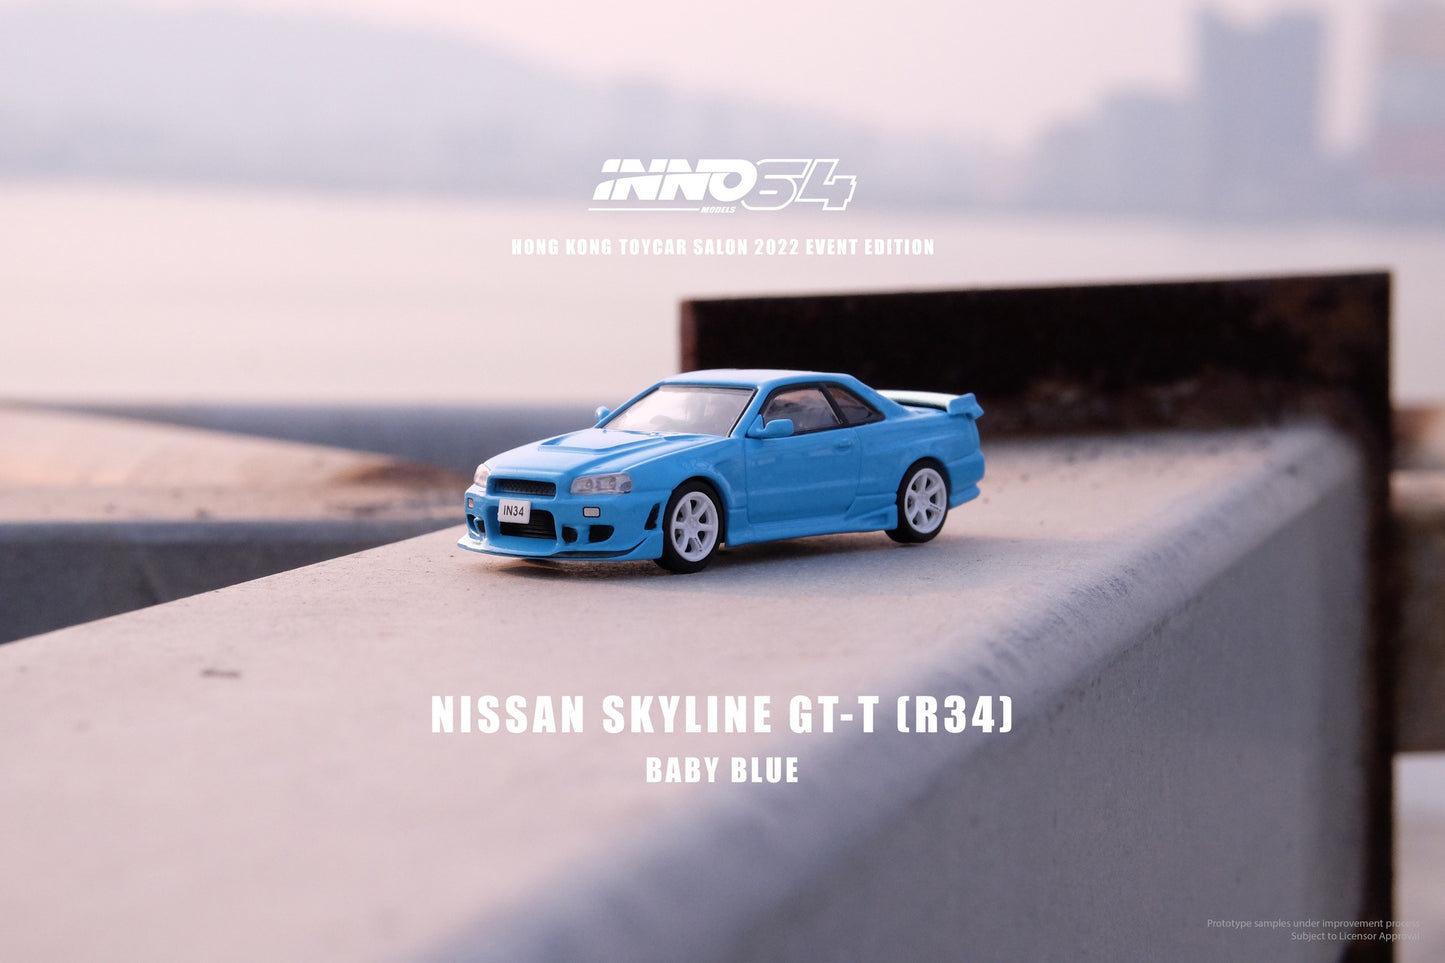 Inno64 Hongkong Tpycar Salon 2022 Event Edition Nissan Skyline GTR R34 Baby Blue 1:64